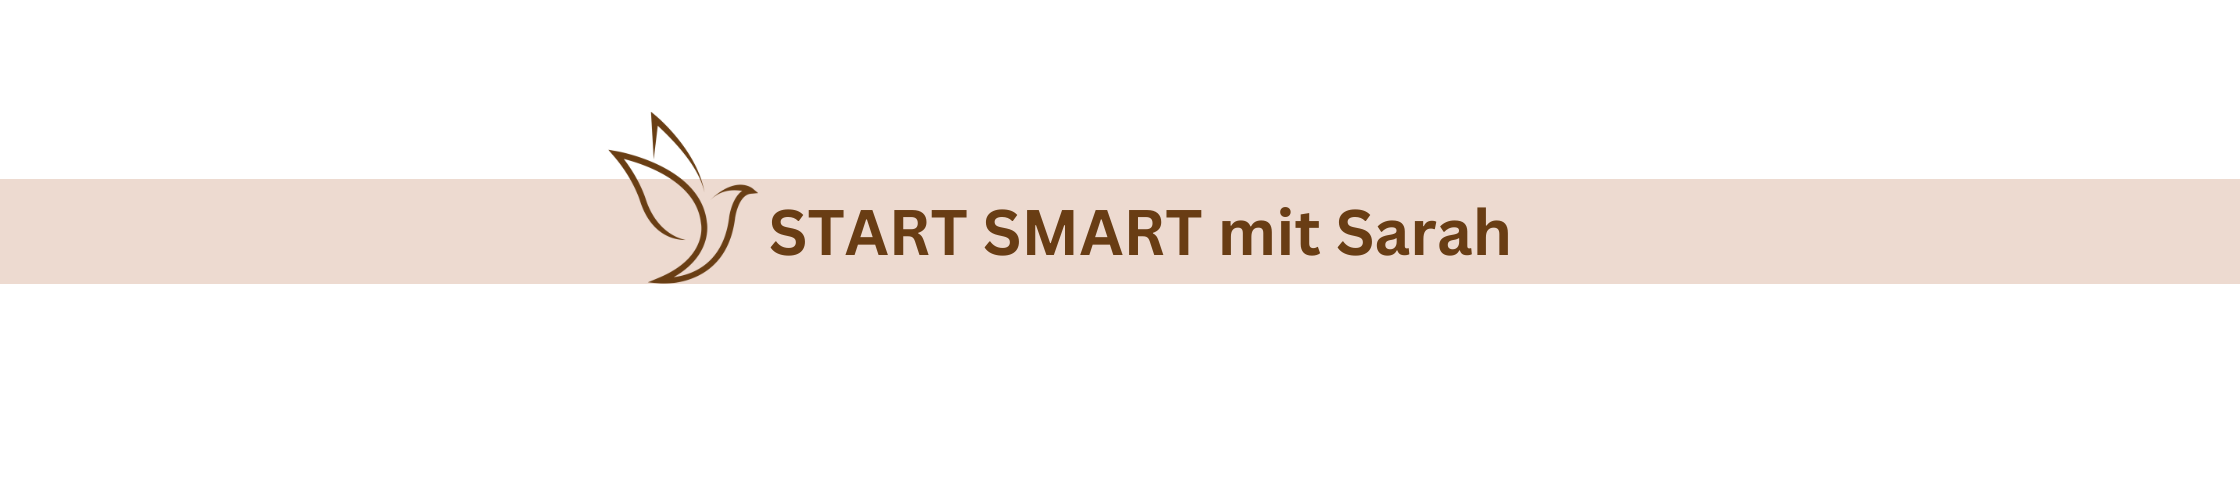 Start smart mit Sarah